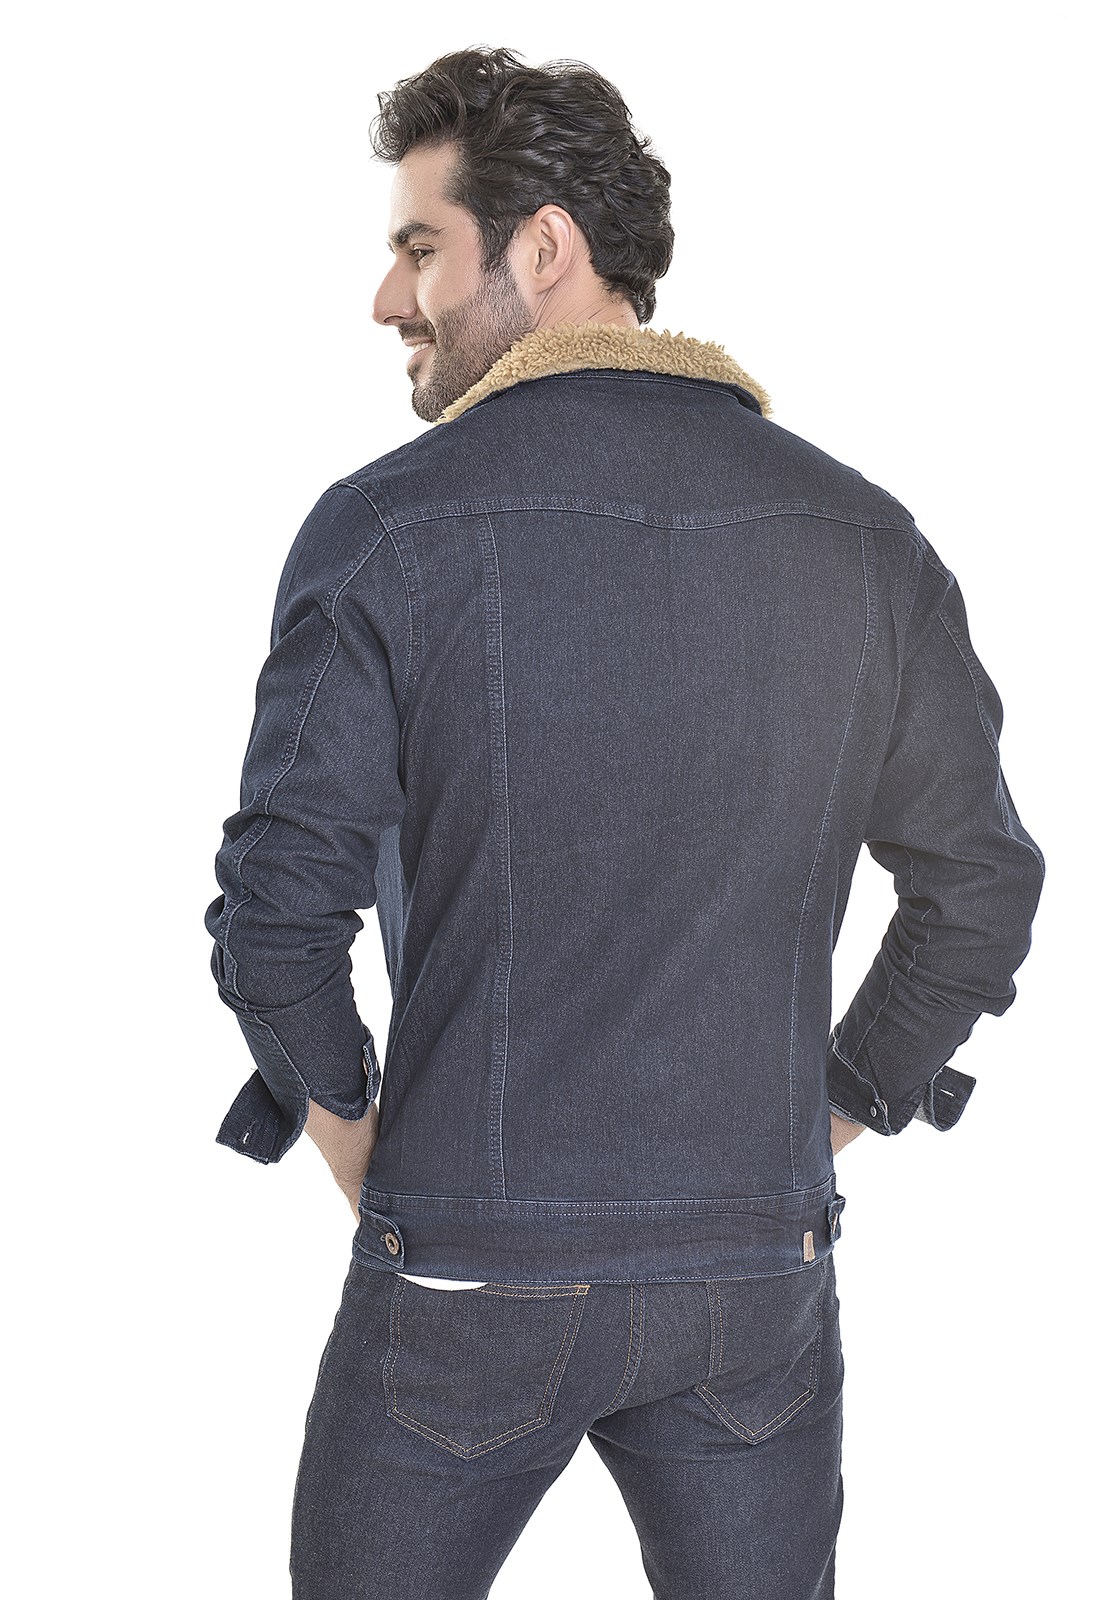 jaqueta jeans com pelo na gola masculina